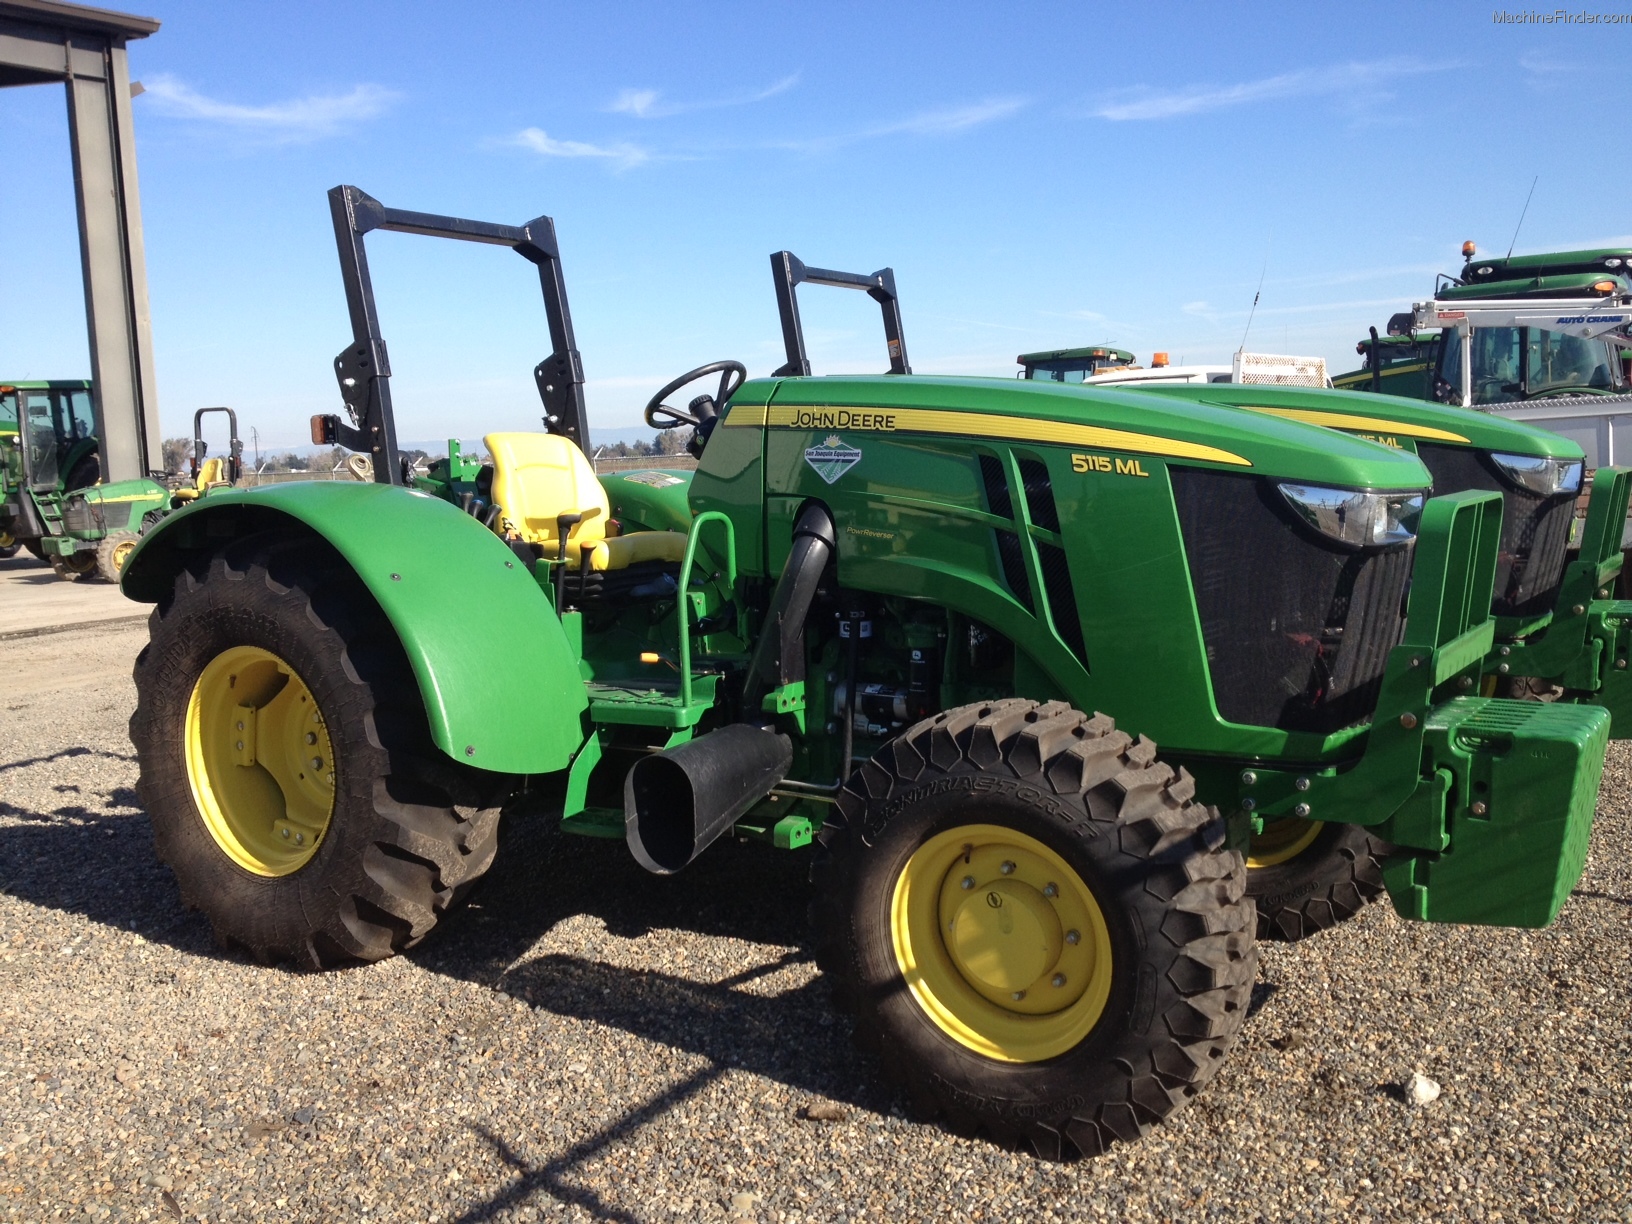 2012 John Deere 5115ML Tractors - Utility (40-100hp ...